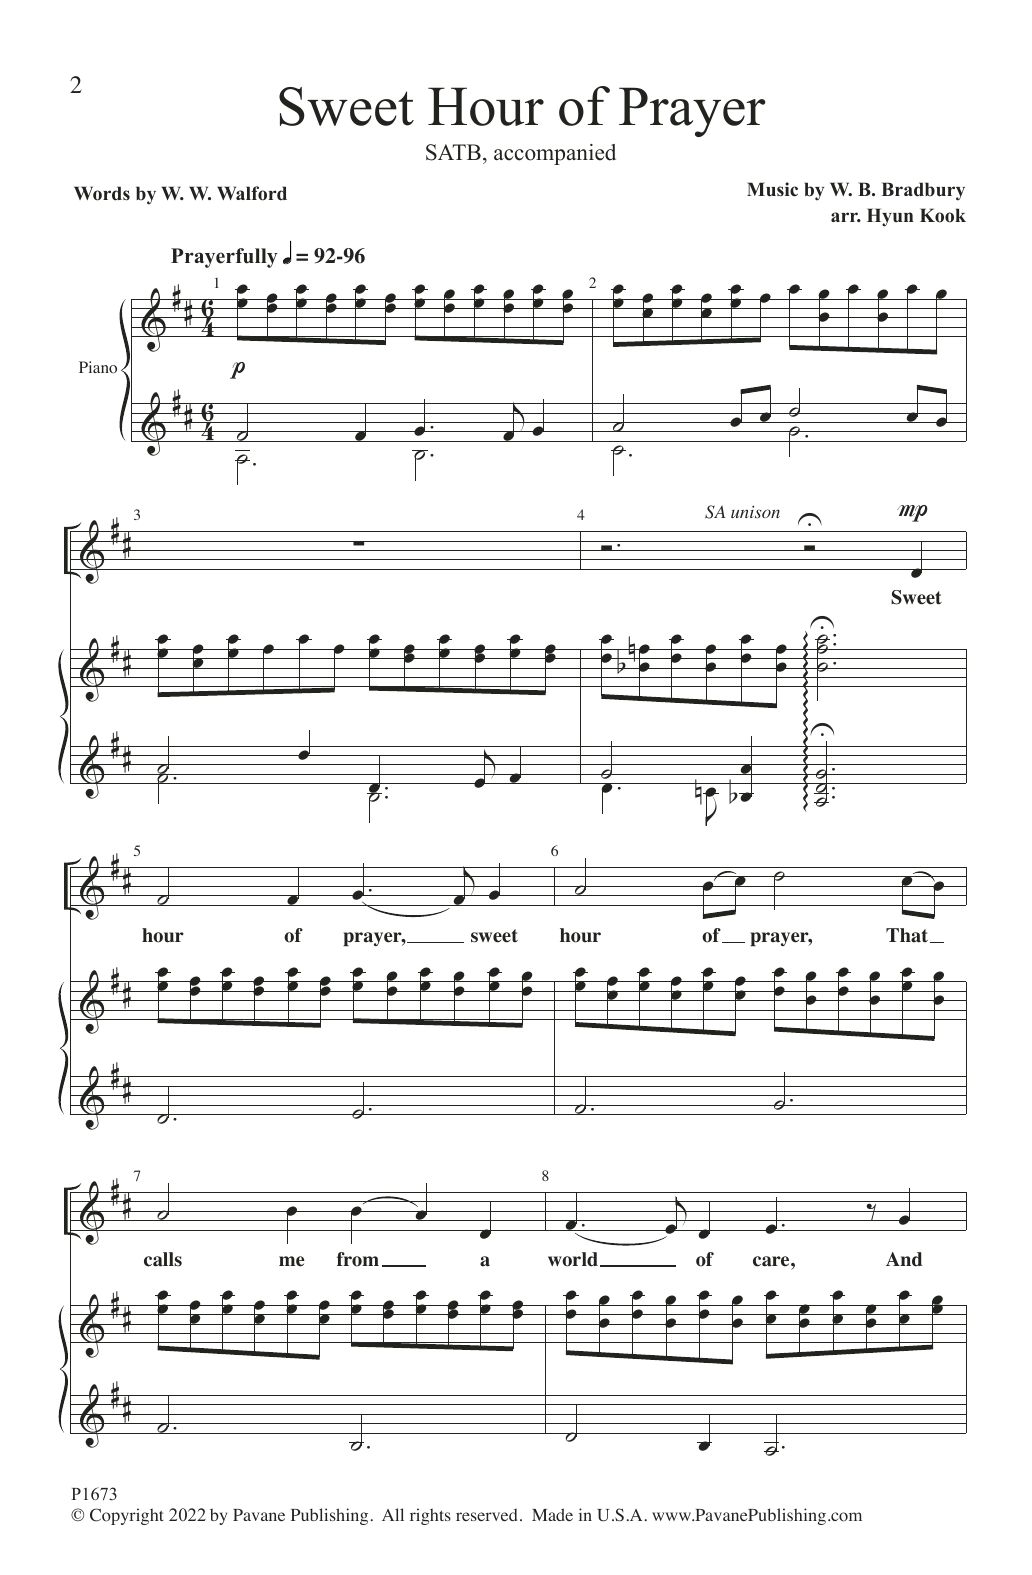 W.B. Bradbury Sweet Hour of Prayer (arr. Hyun Kook) Sheet Music Notes & Chords for SATB Choir - Download or Print PDF